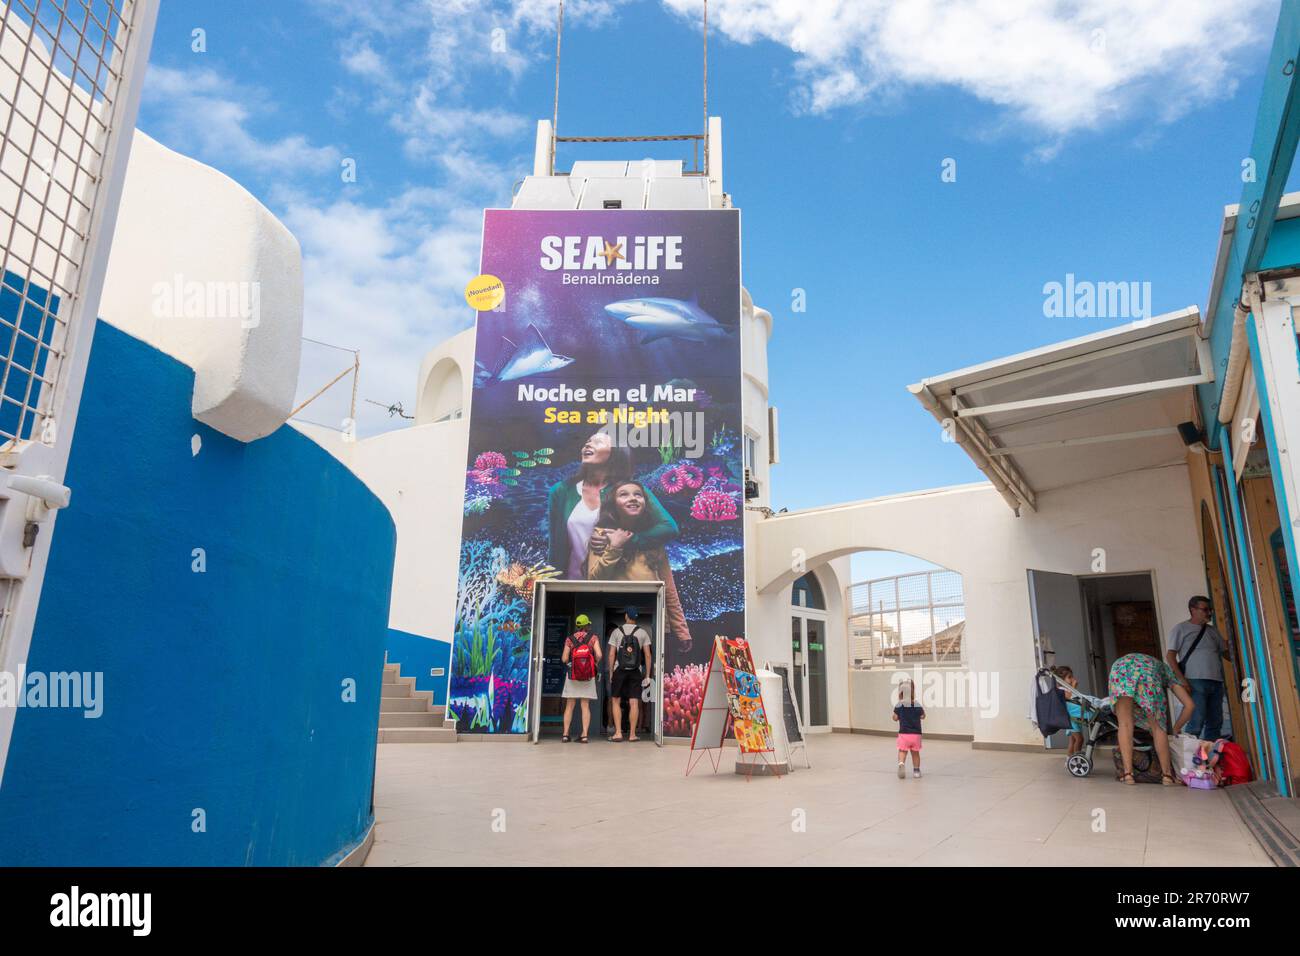 Sea Life, Eintritt zum Aquarium Sea Life in der Marina von Benalmadena, Costa del sol, Andalusien, Spanien. Stockfoto